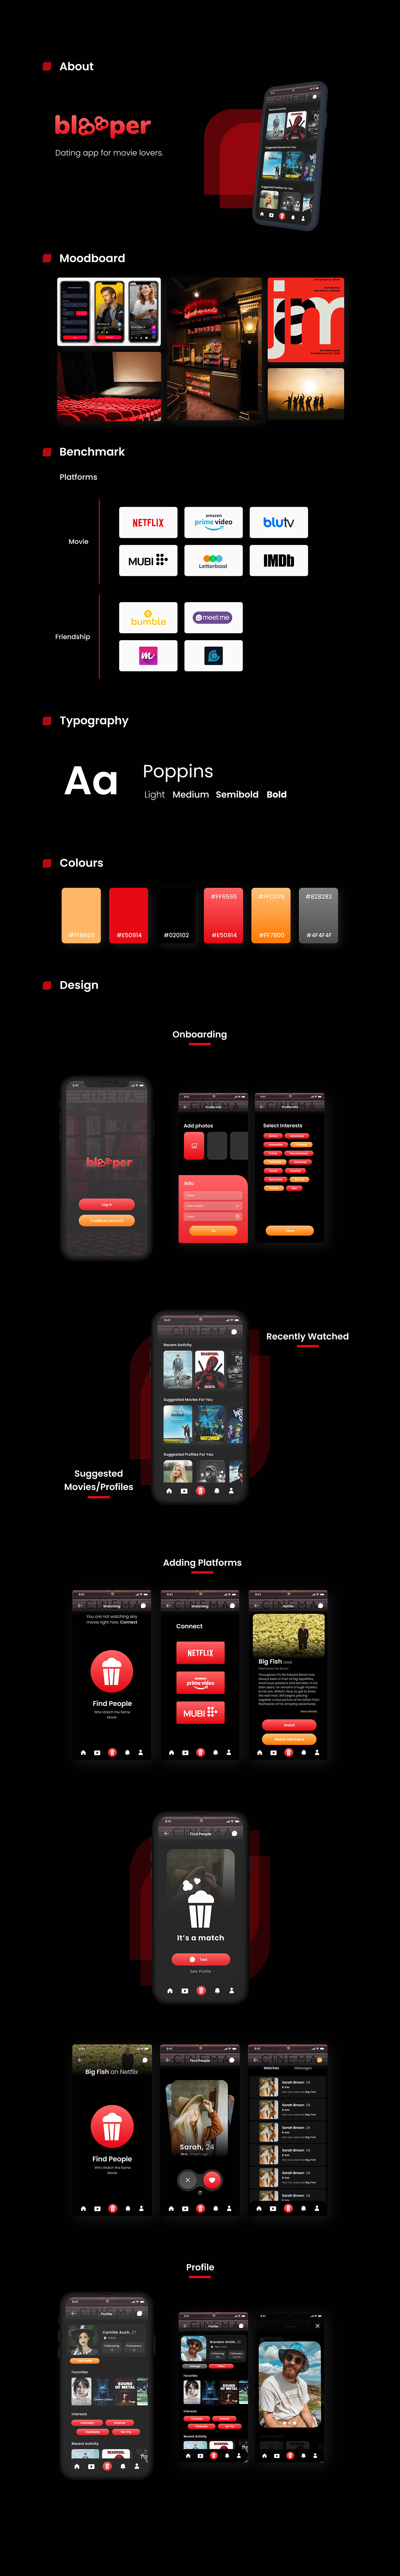 app Cinema friend match movie ui design user interface